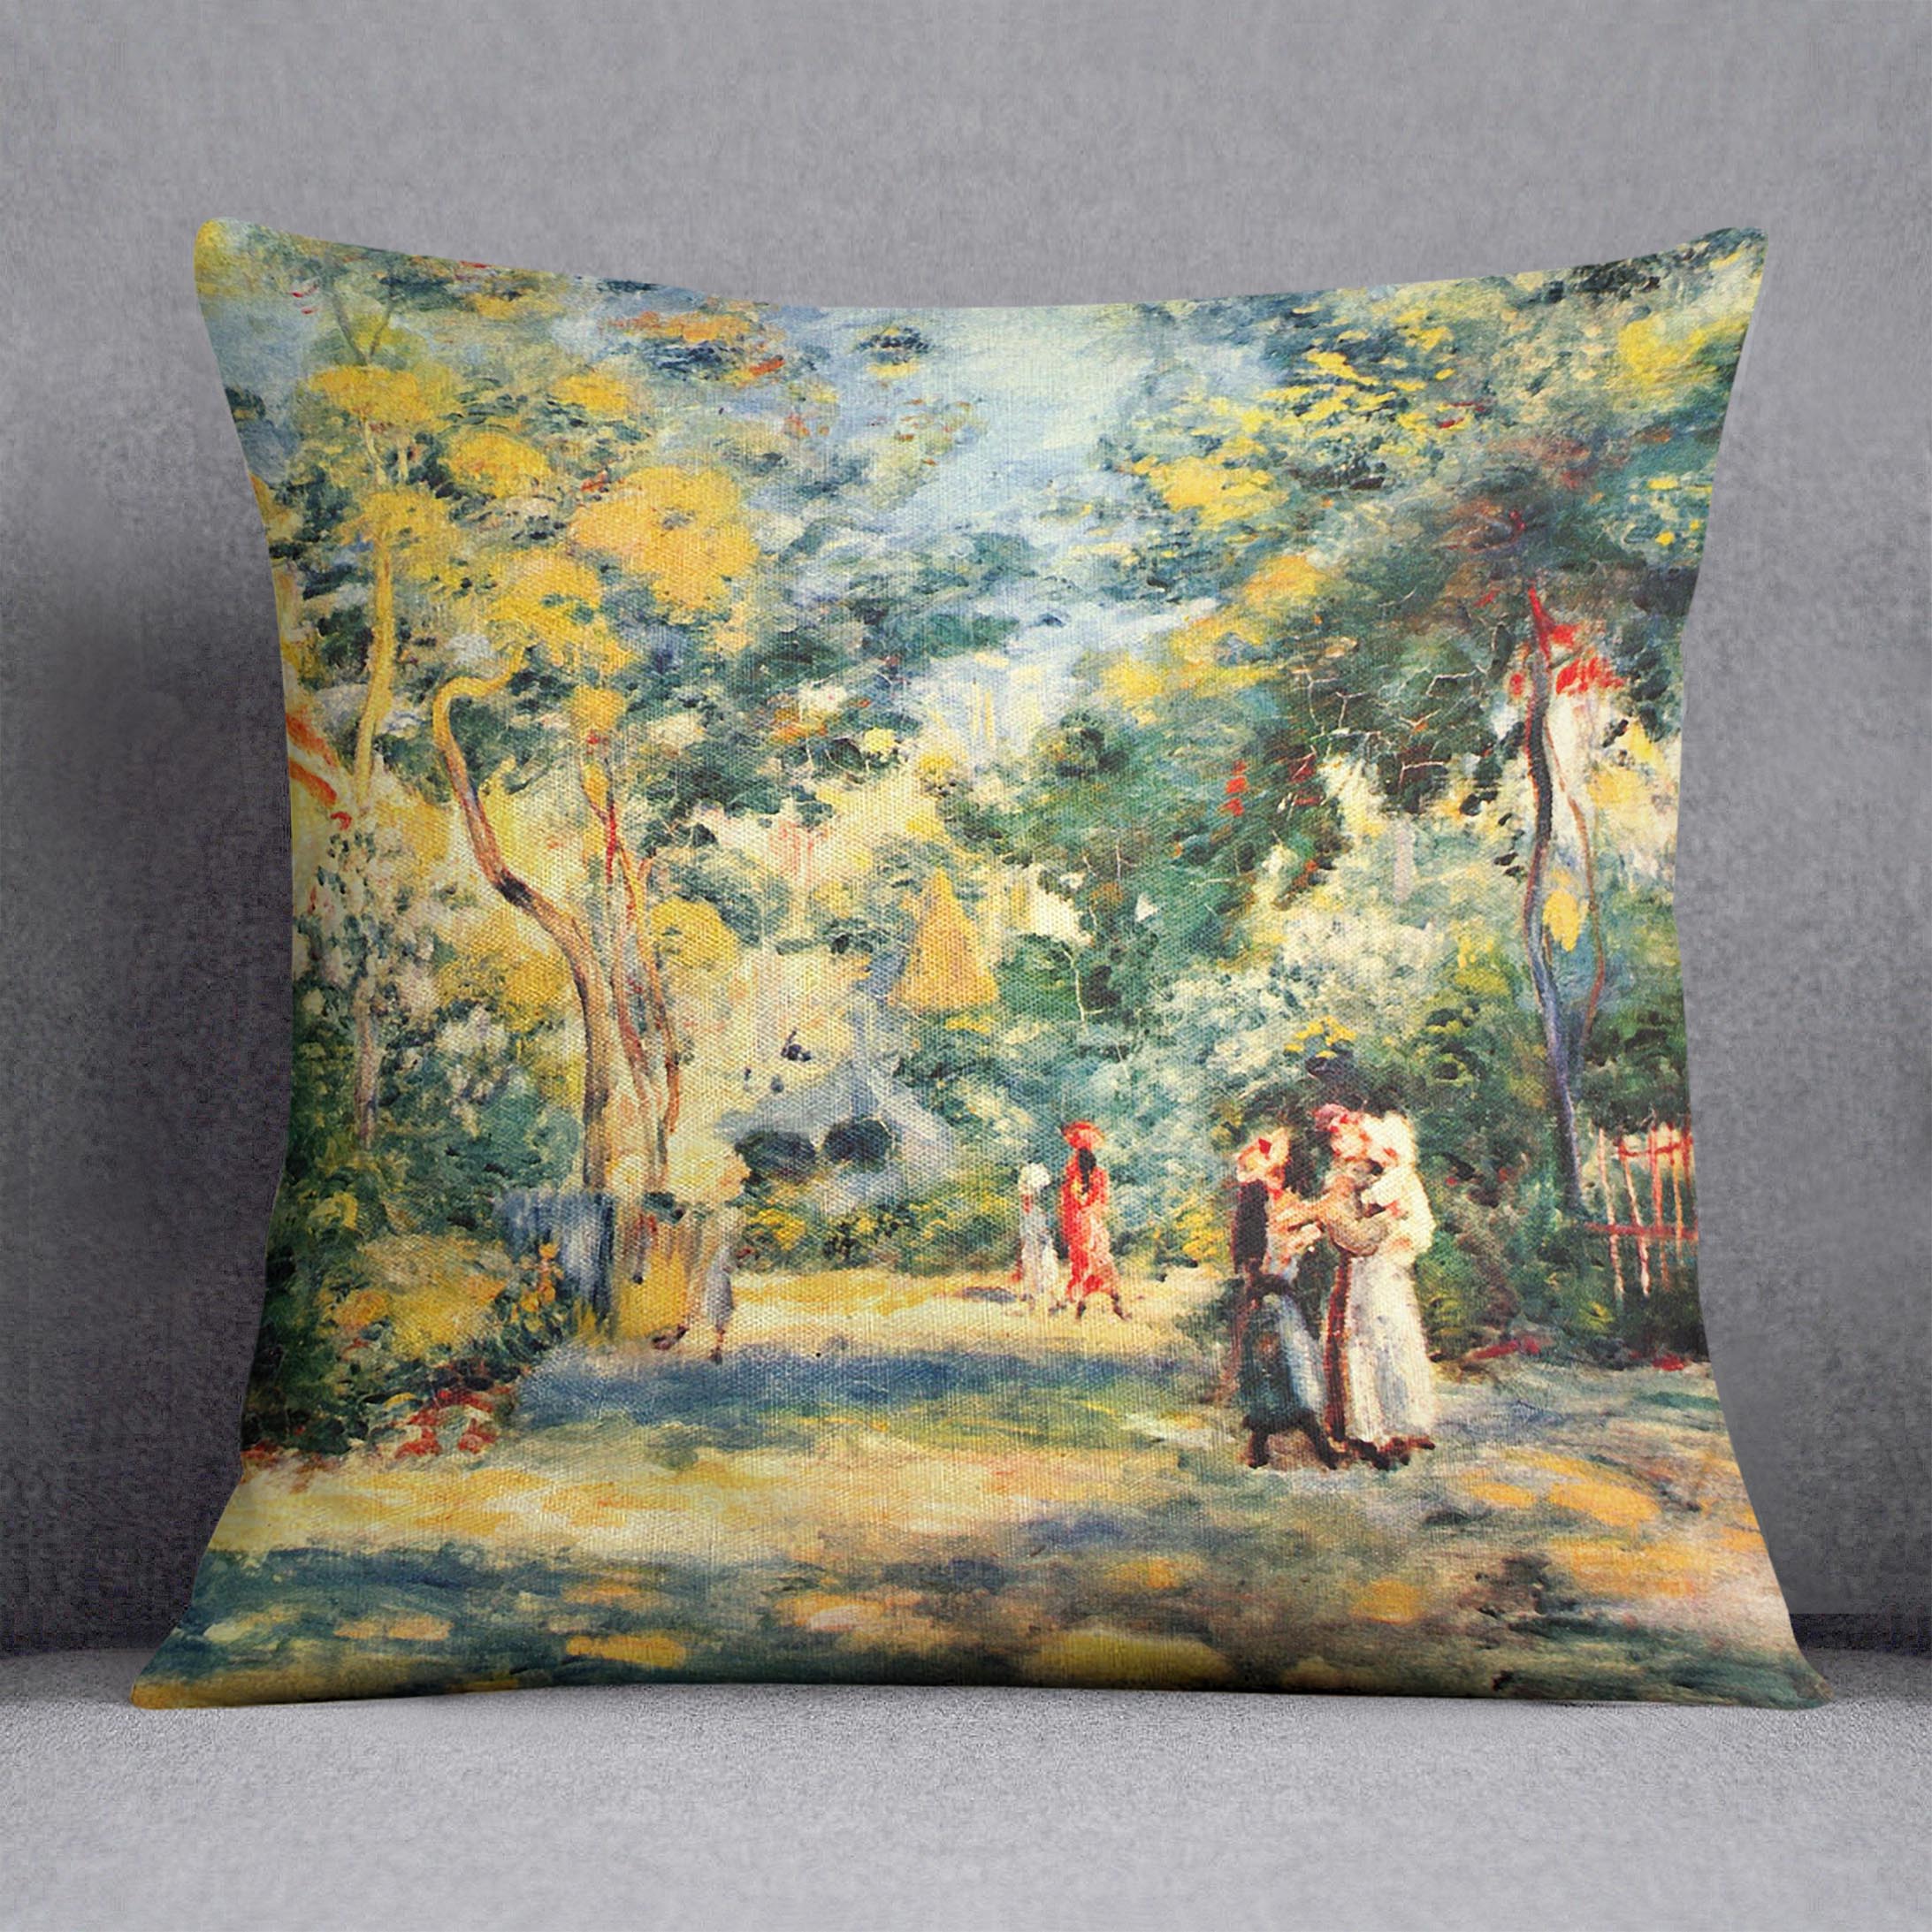 Figures in the garden by Renoir Cushion